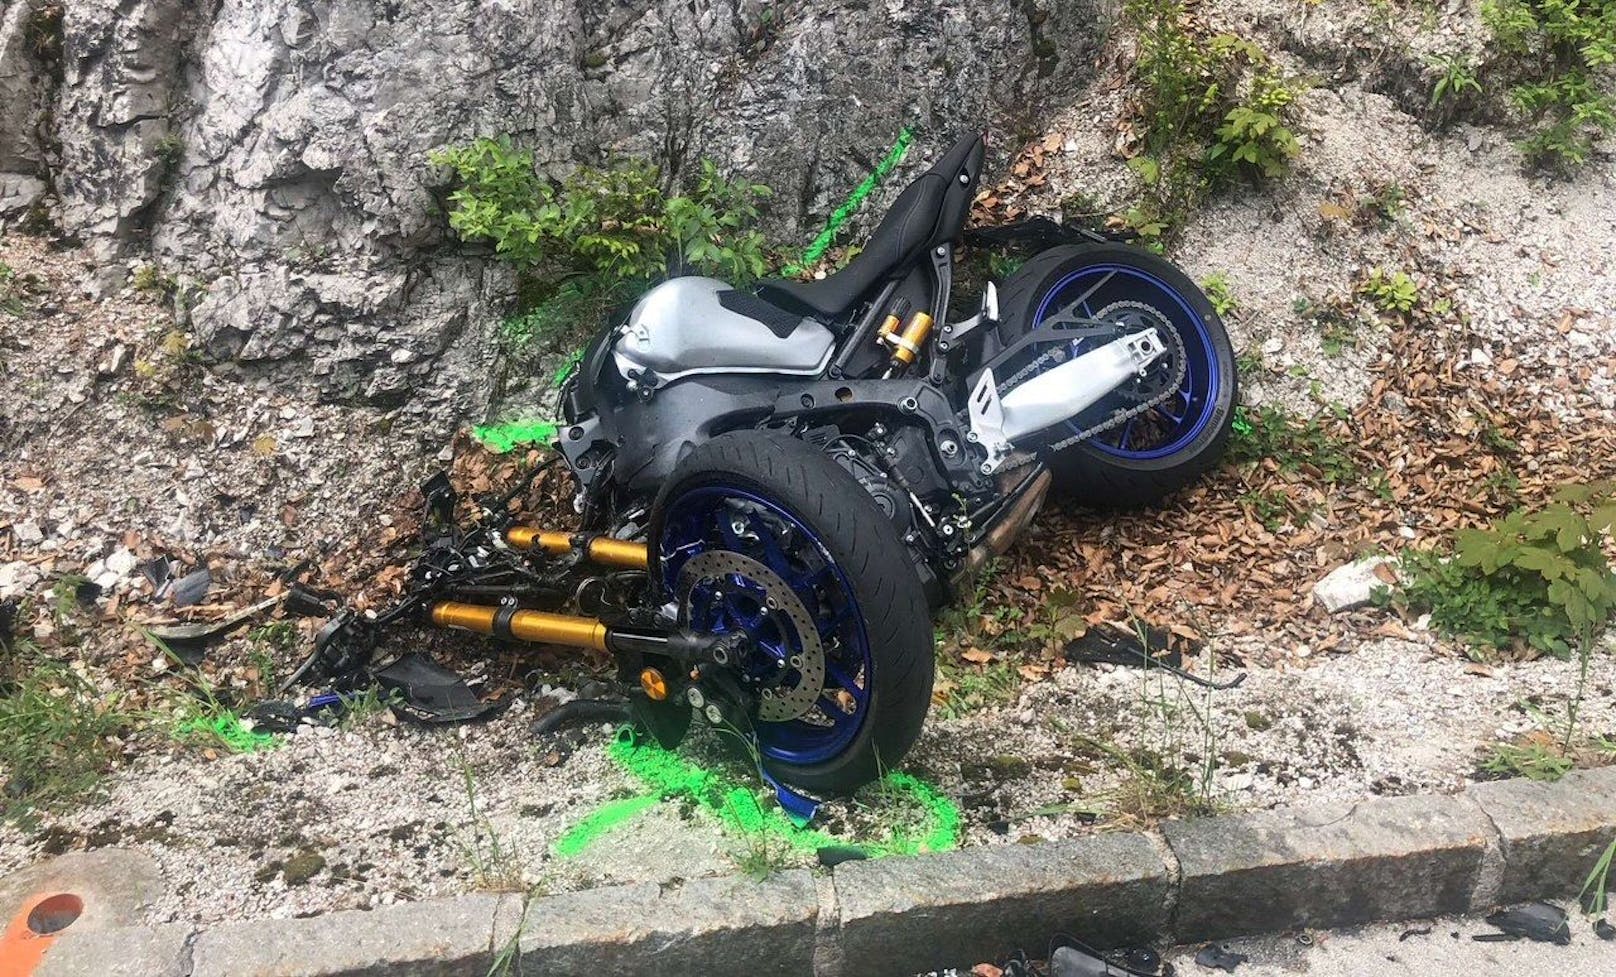 Biker-Frontal-Unfall